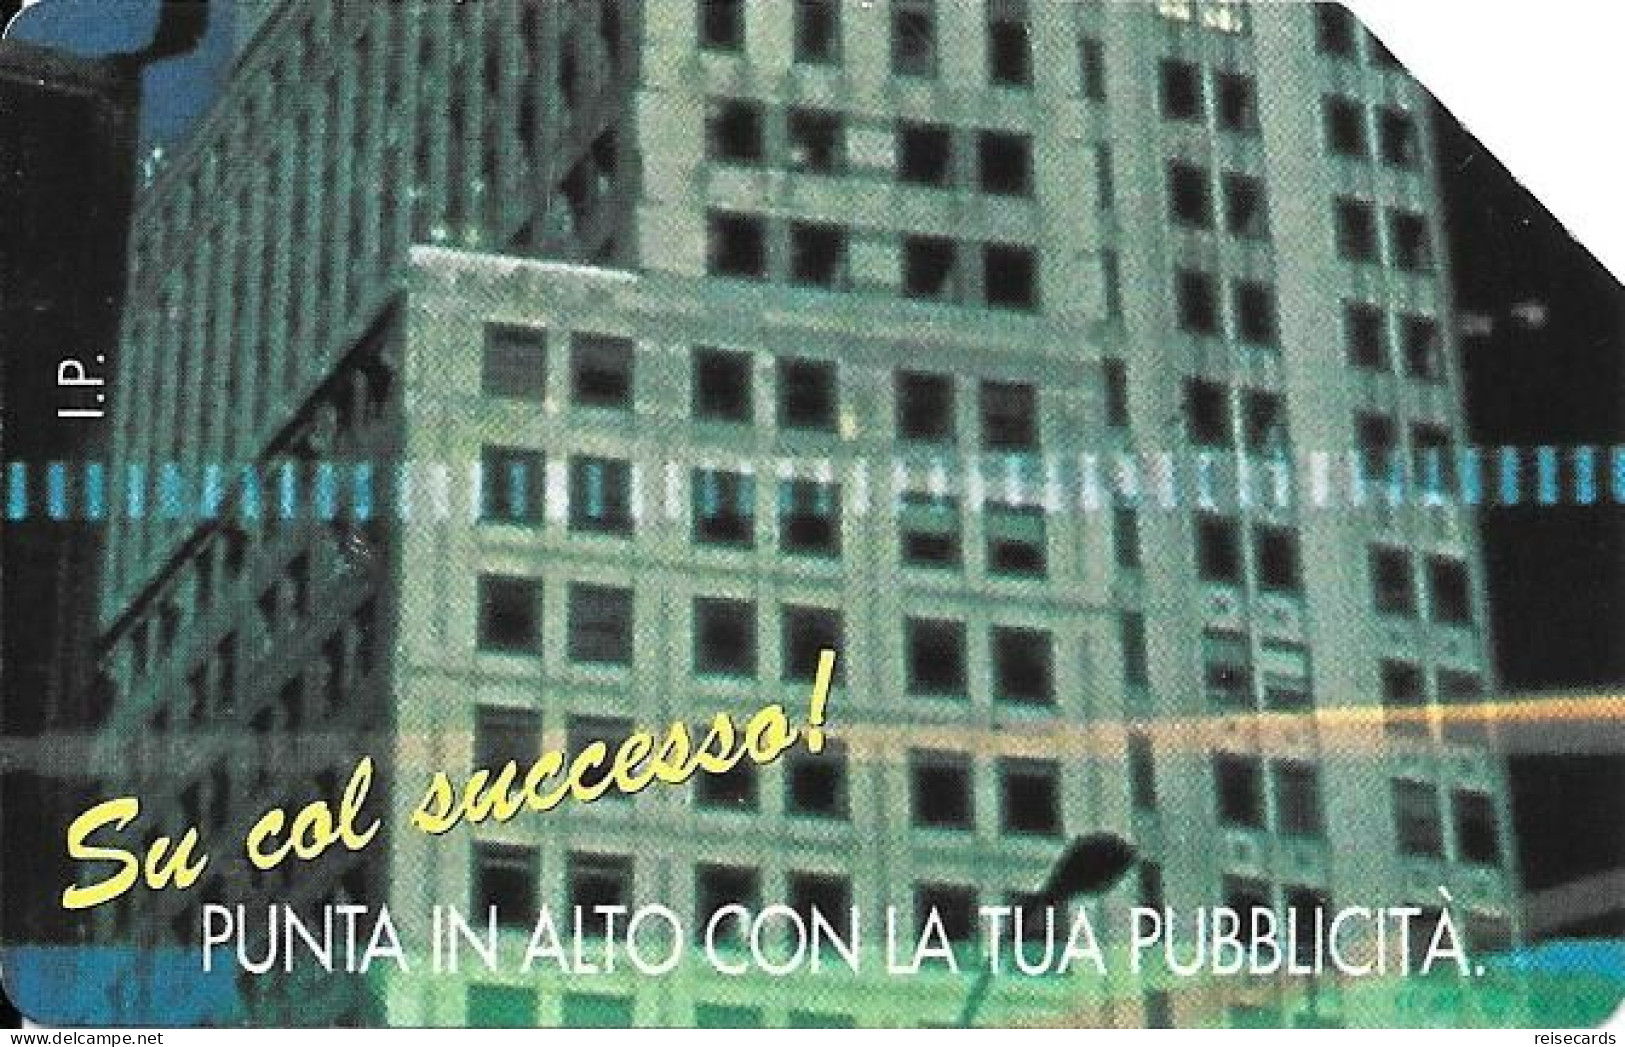 Italy: Telecom Italia - M.M. Pubblicità, Su Col Successo! - Publiques Publicitaires